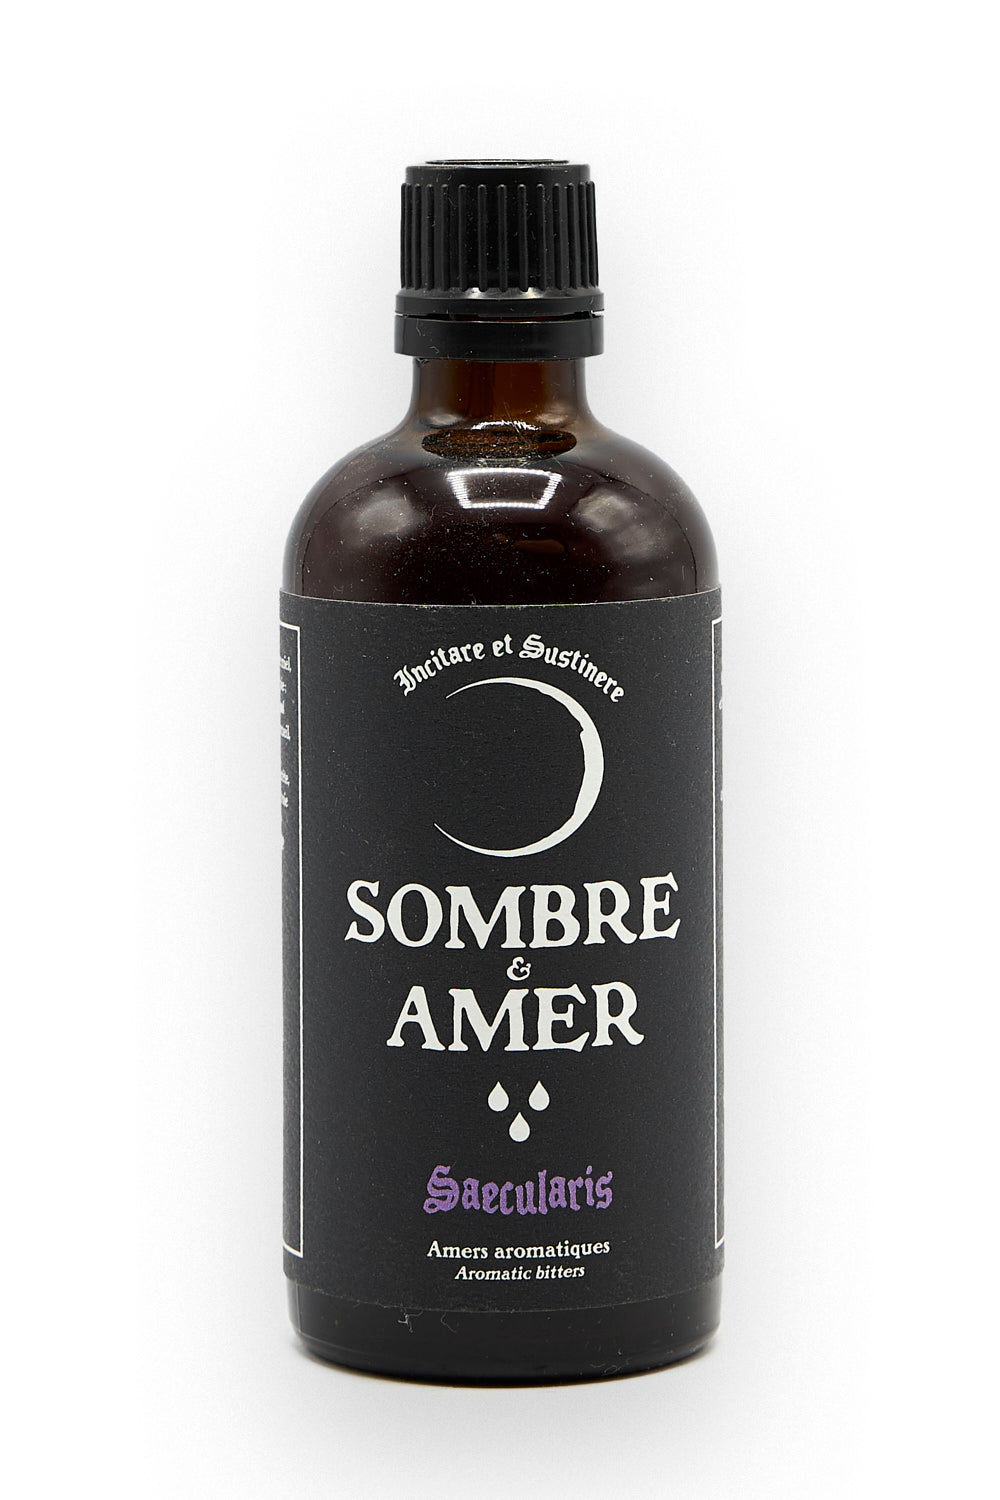 Sombre & Amer Saecularis Aromatic